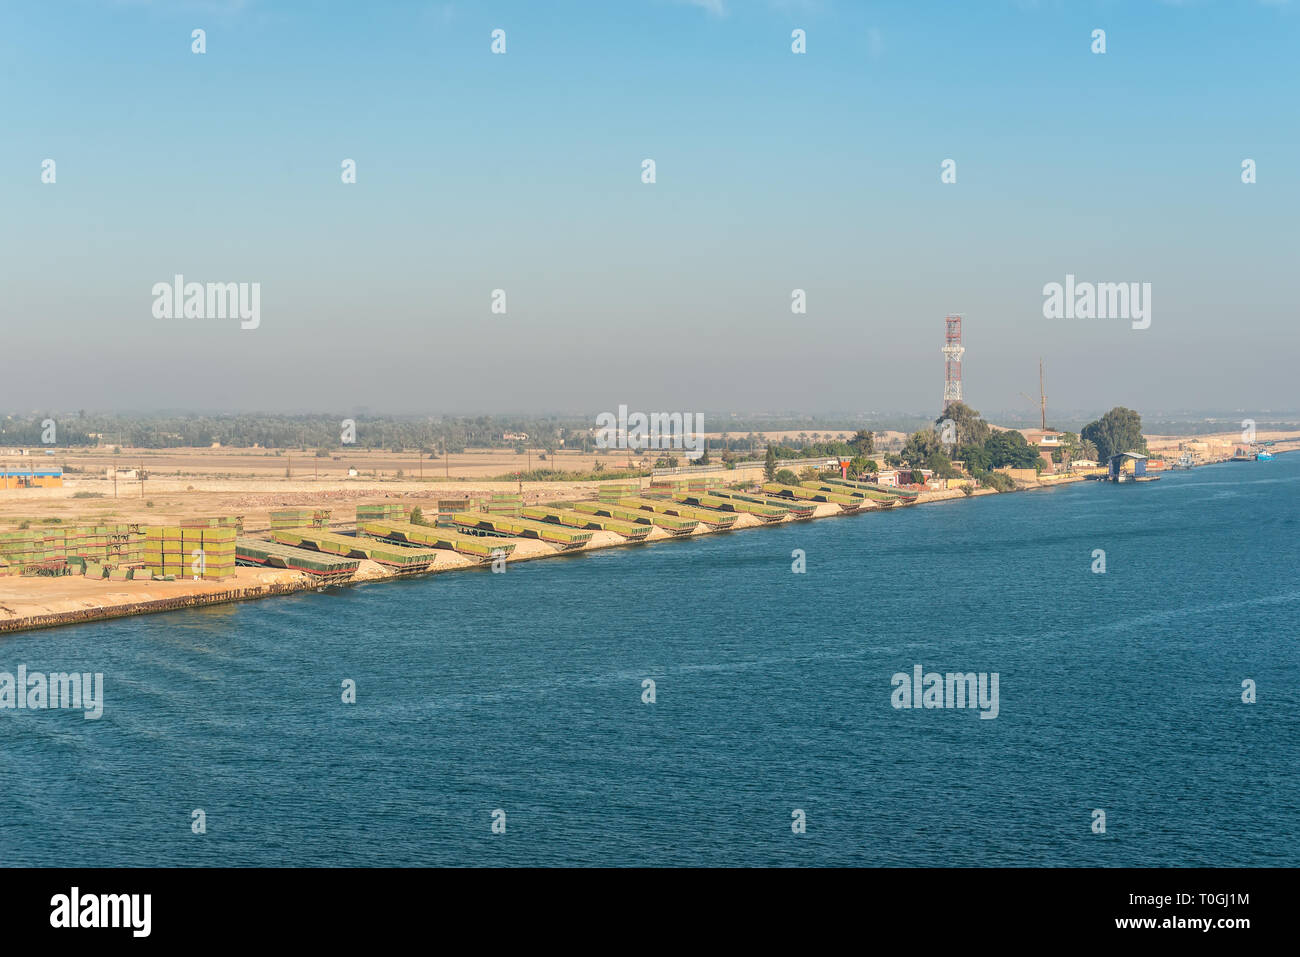 El Qantara, Egypt - November 5, 2017: Pontoons bridge for crossing the Suez Canal lie on the shore of canal near El Qantara, Egypt. Stock Photo